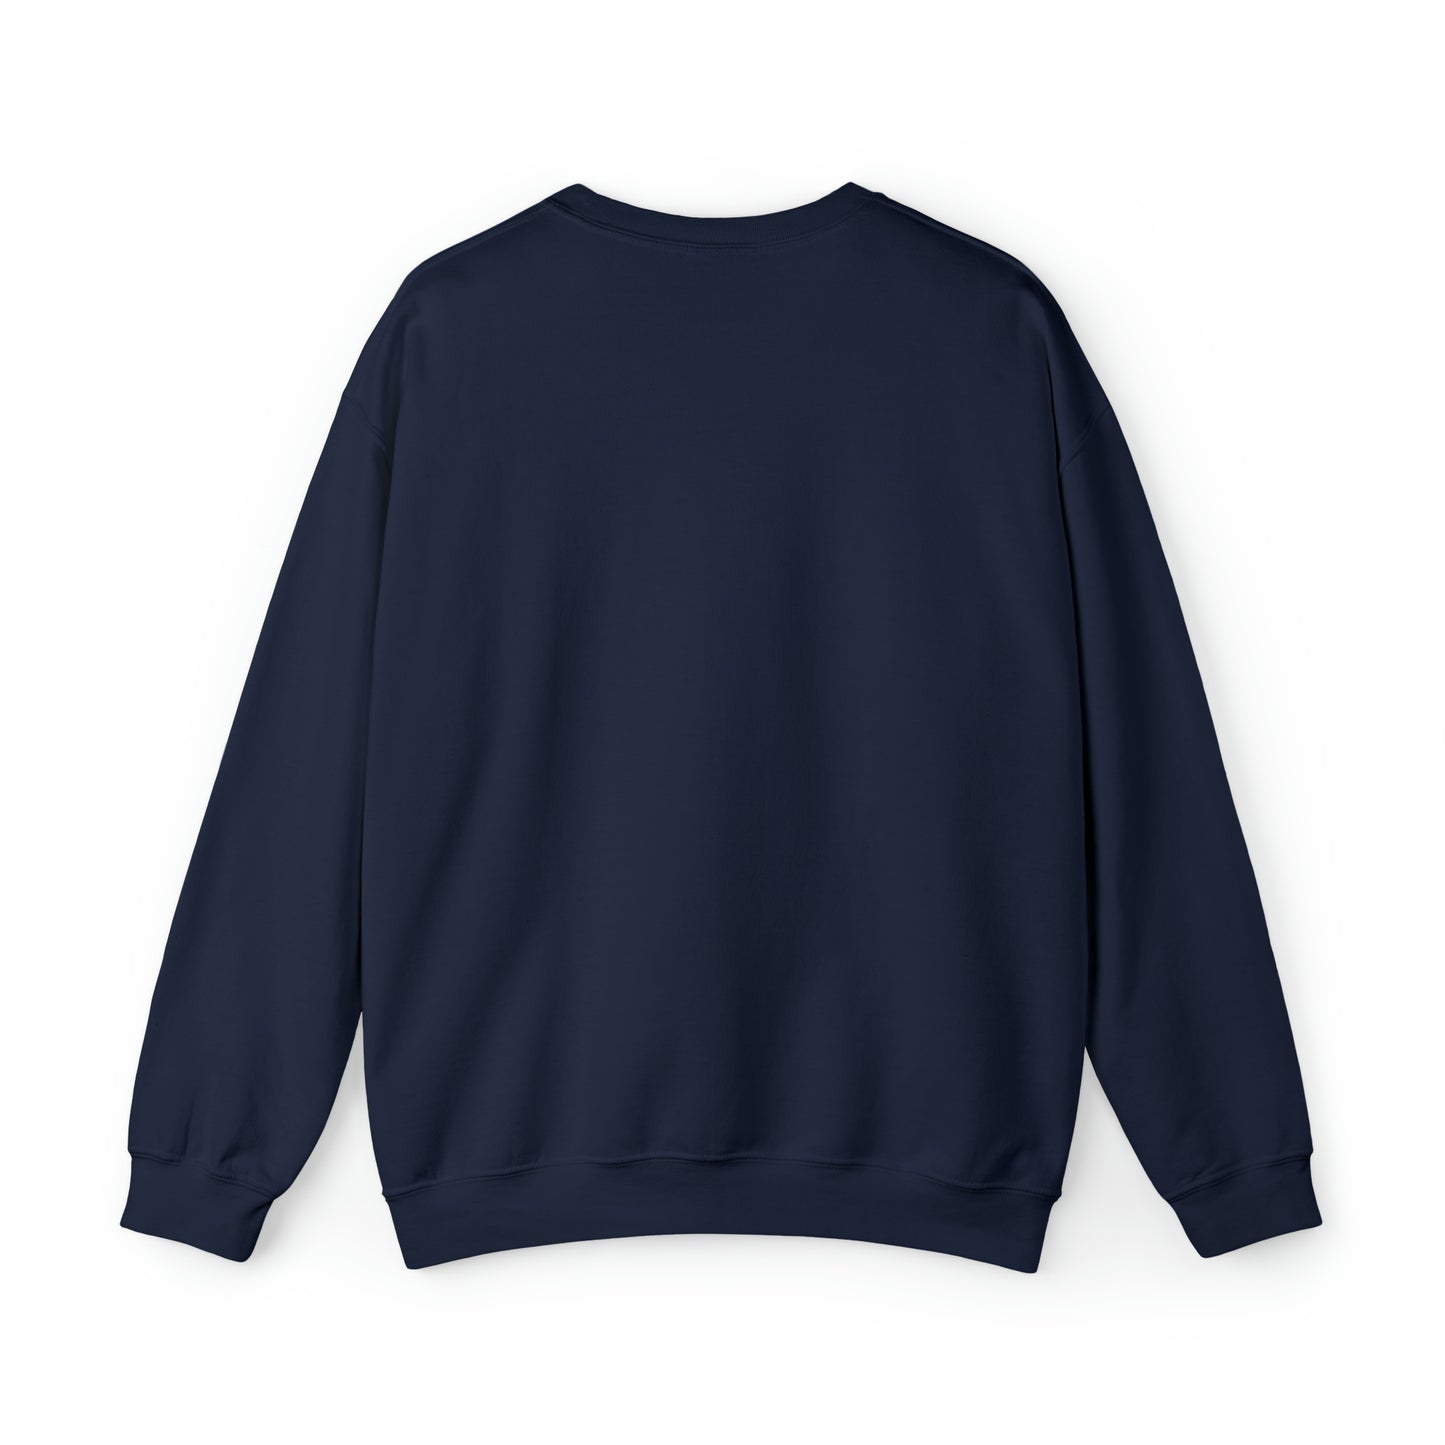 Back and Body Hurts Sweatshirt,  Sweatshirt, Unisex Heavy Blend Sweater, Gift for mom, Christmas gift